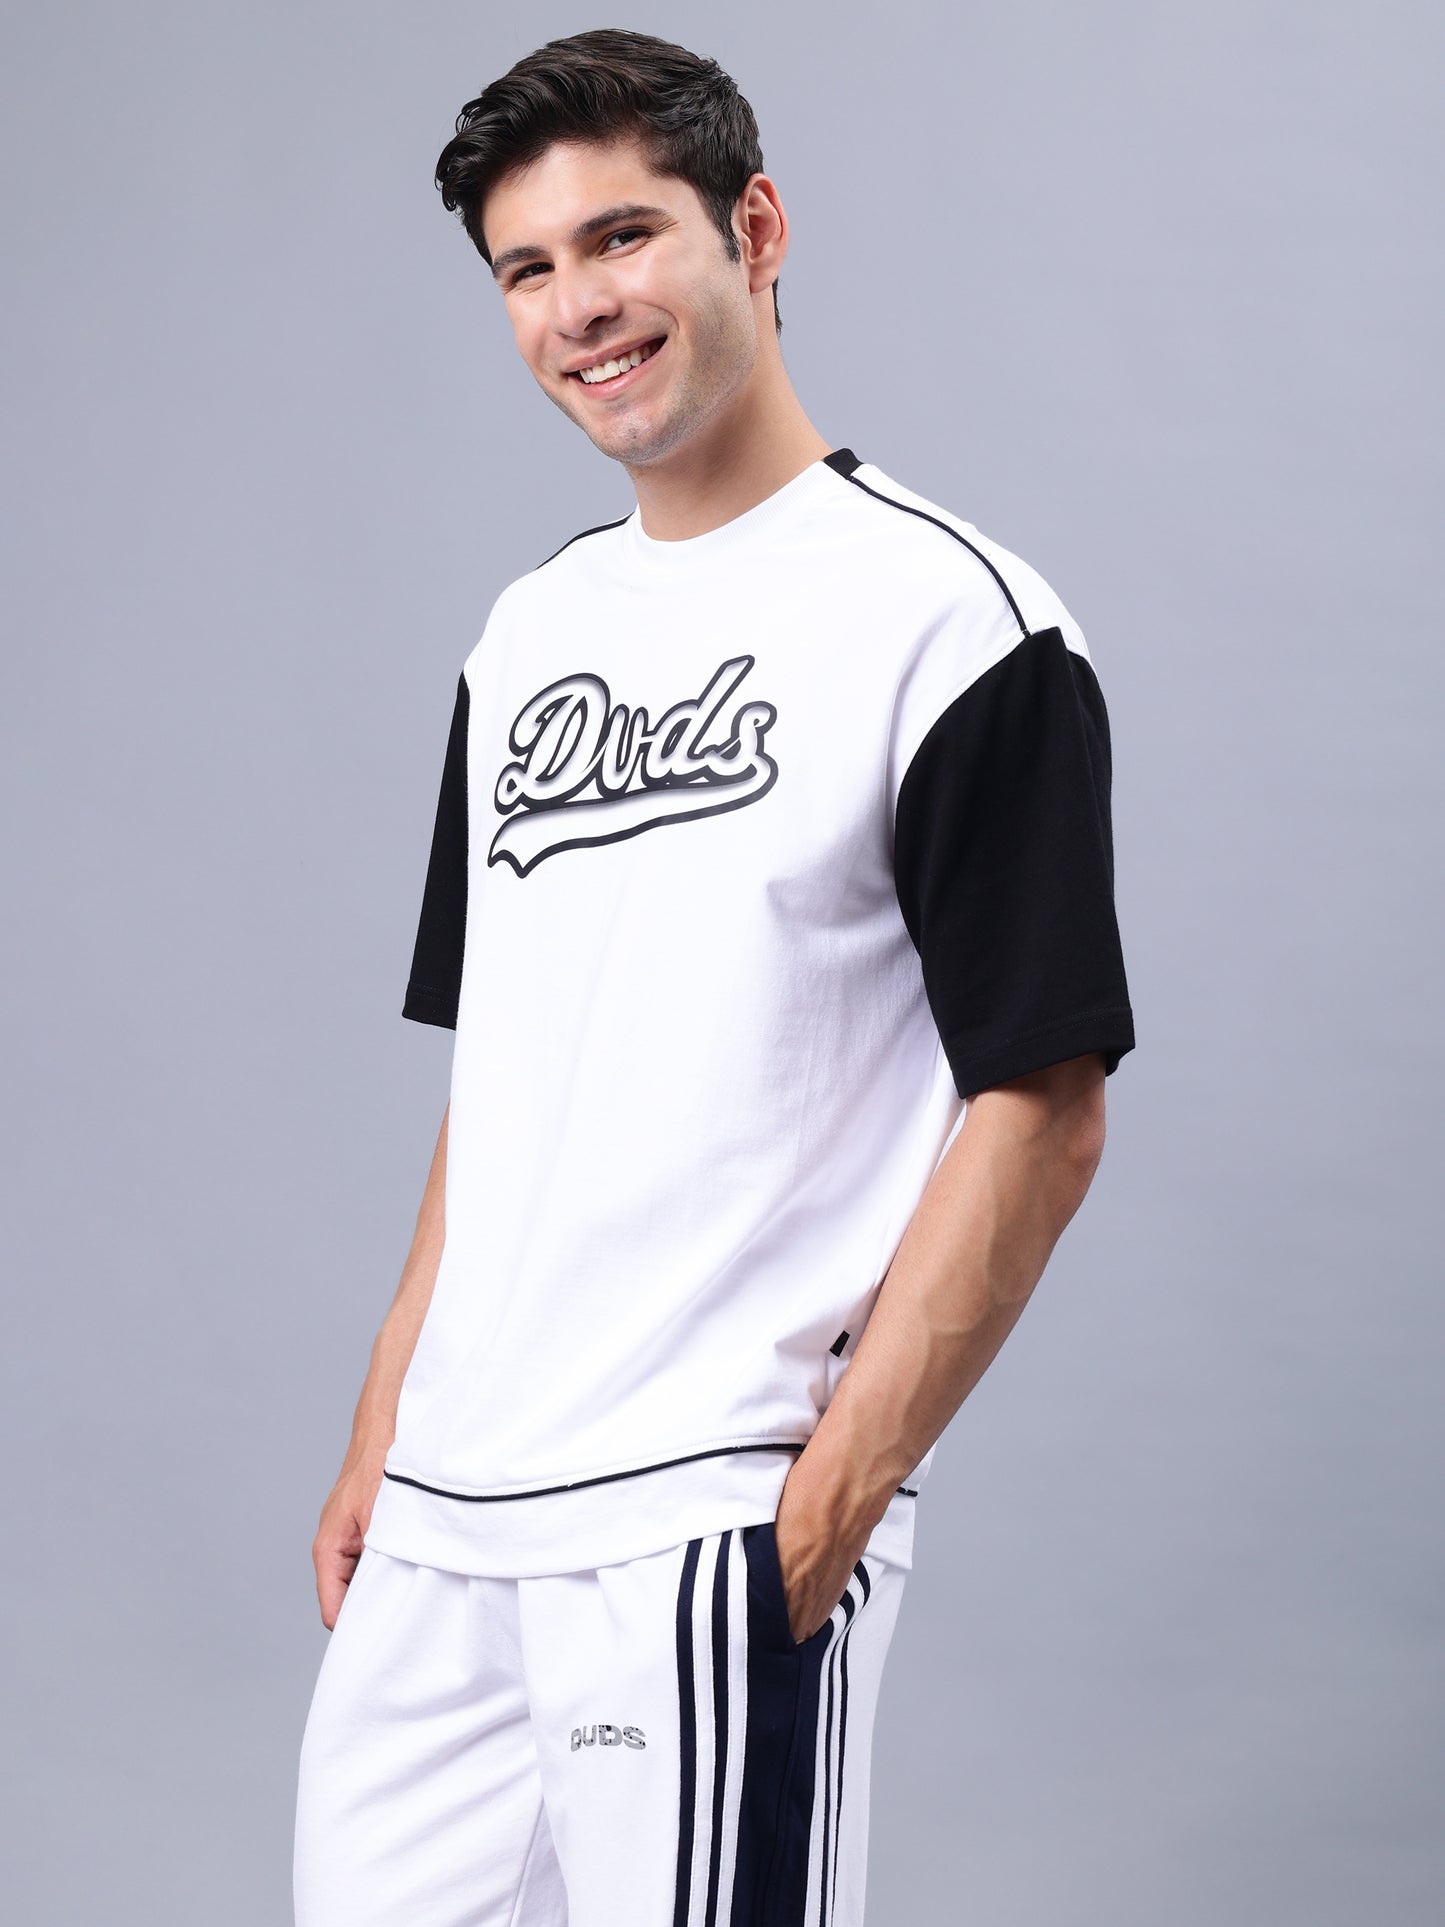 Hunk Over-Sized T-Shirt (White-Black)